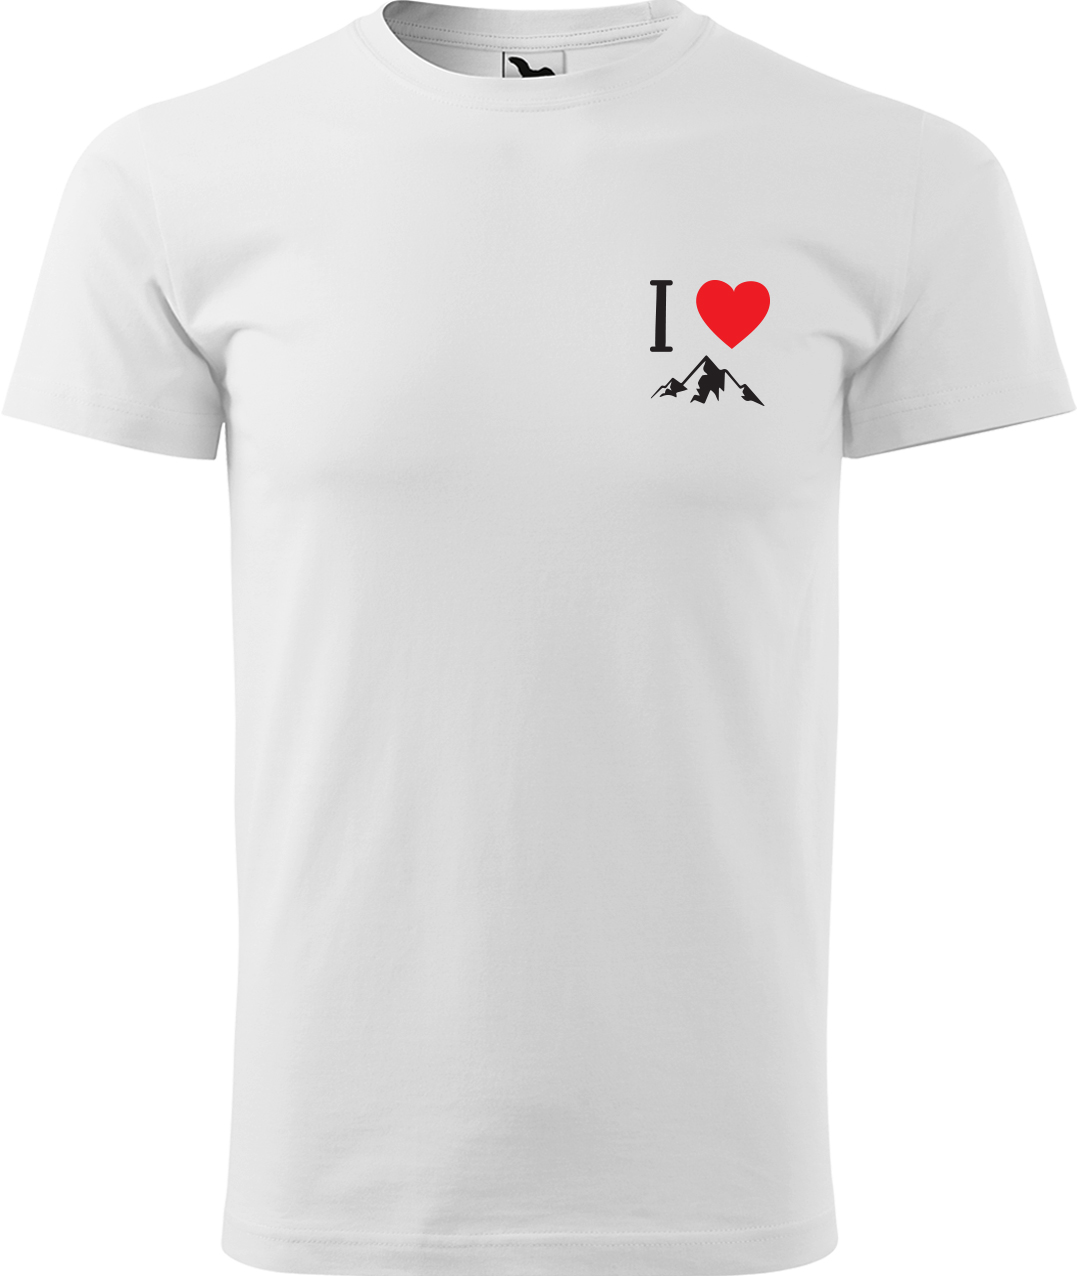 Pánské tričko na hory - I love mountain Velikost: S, Barva: Bílá (00), Střih: pánský